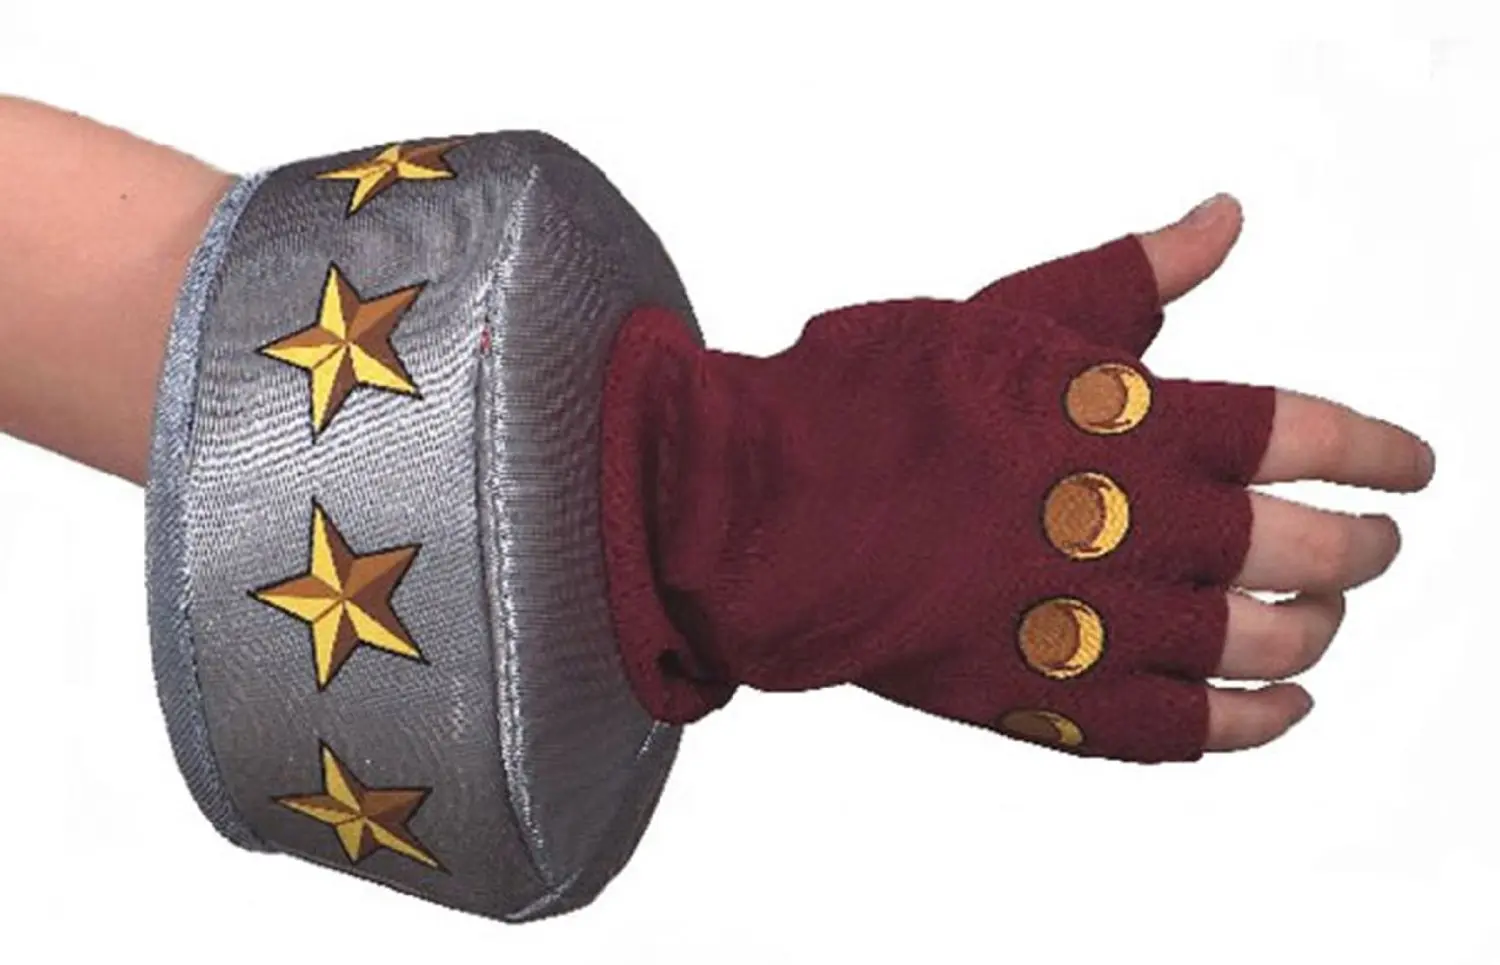 10.99. YuGiOh Costume Glove - Child Std. 